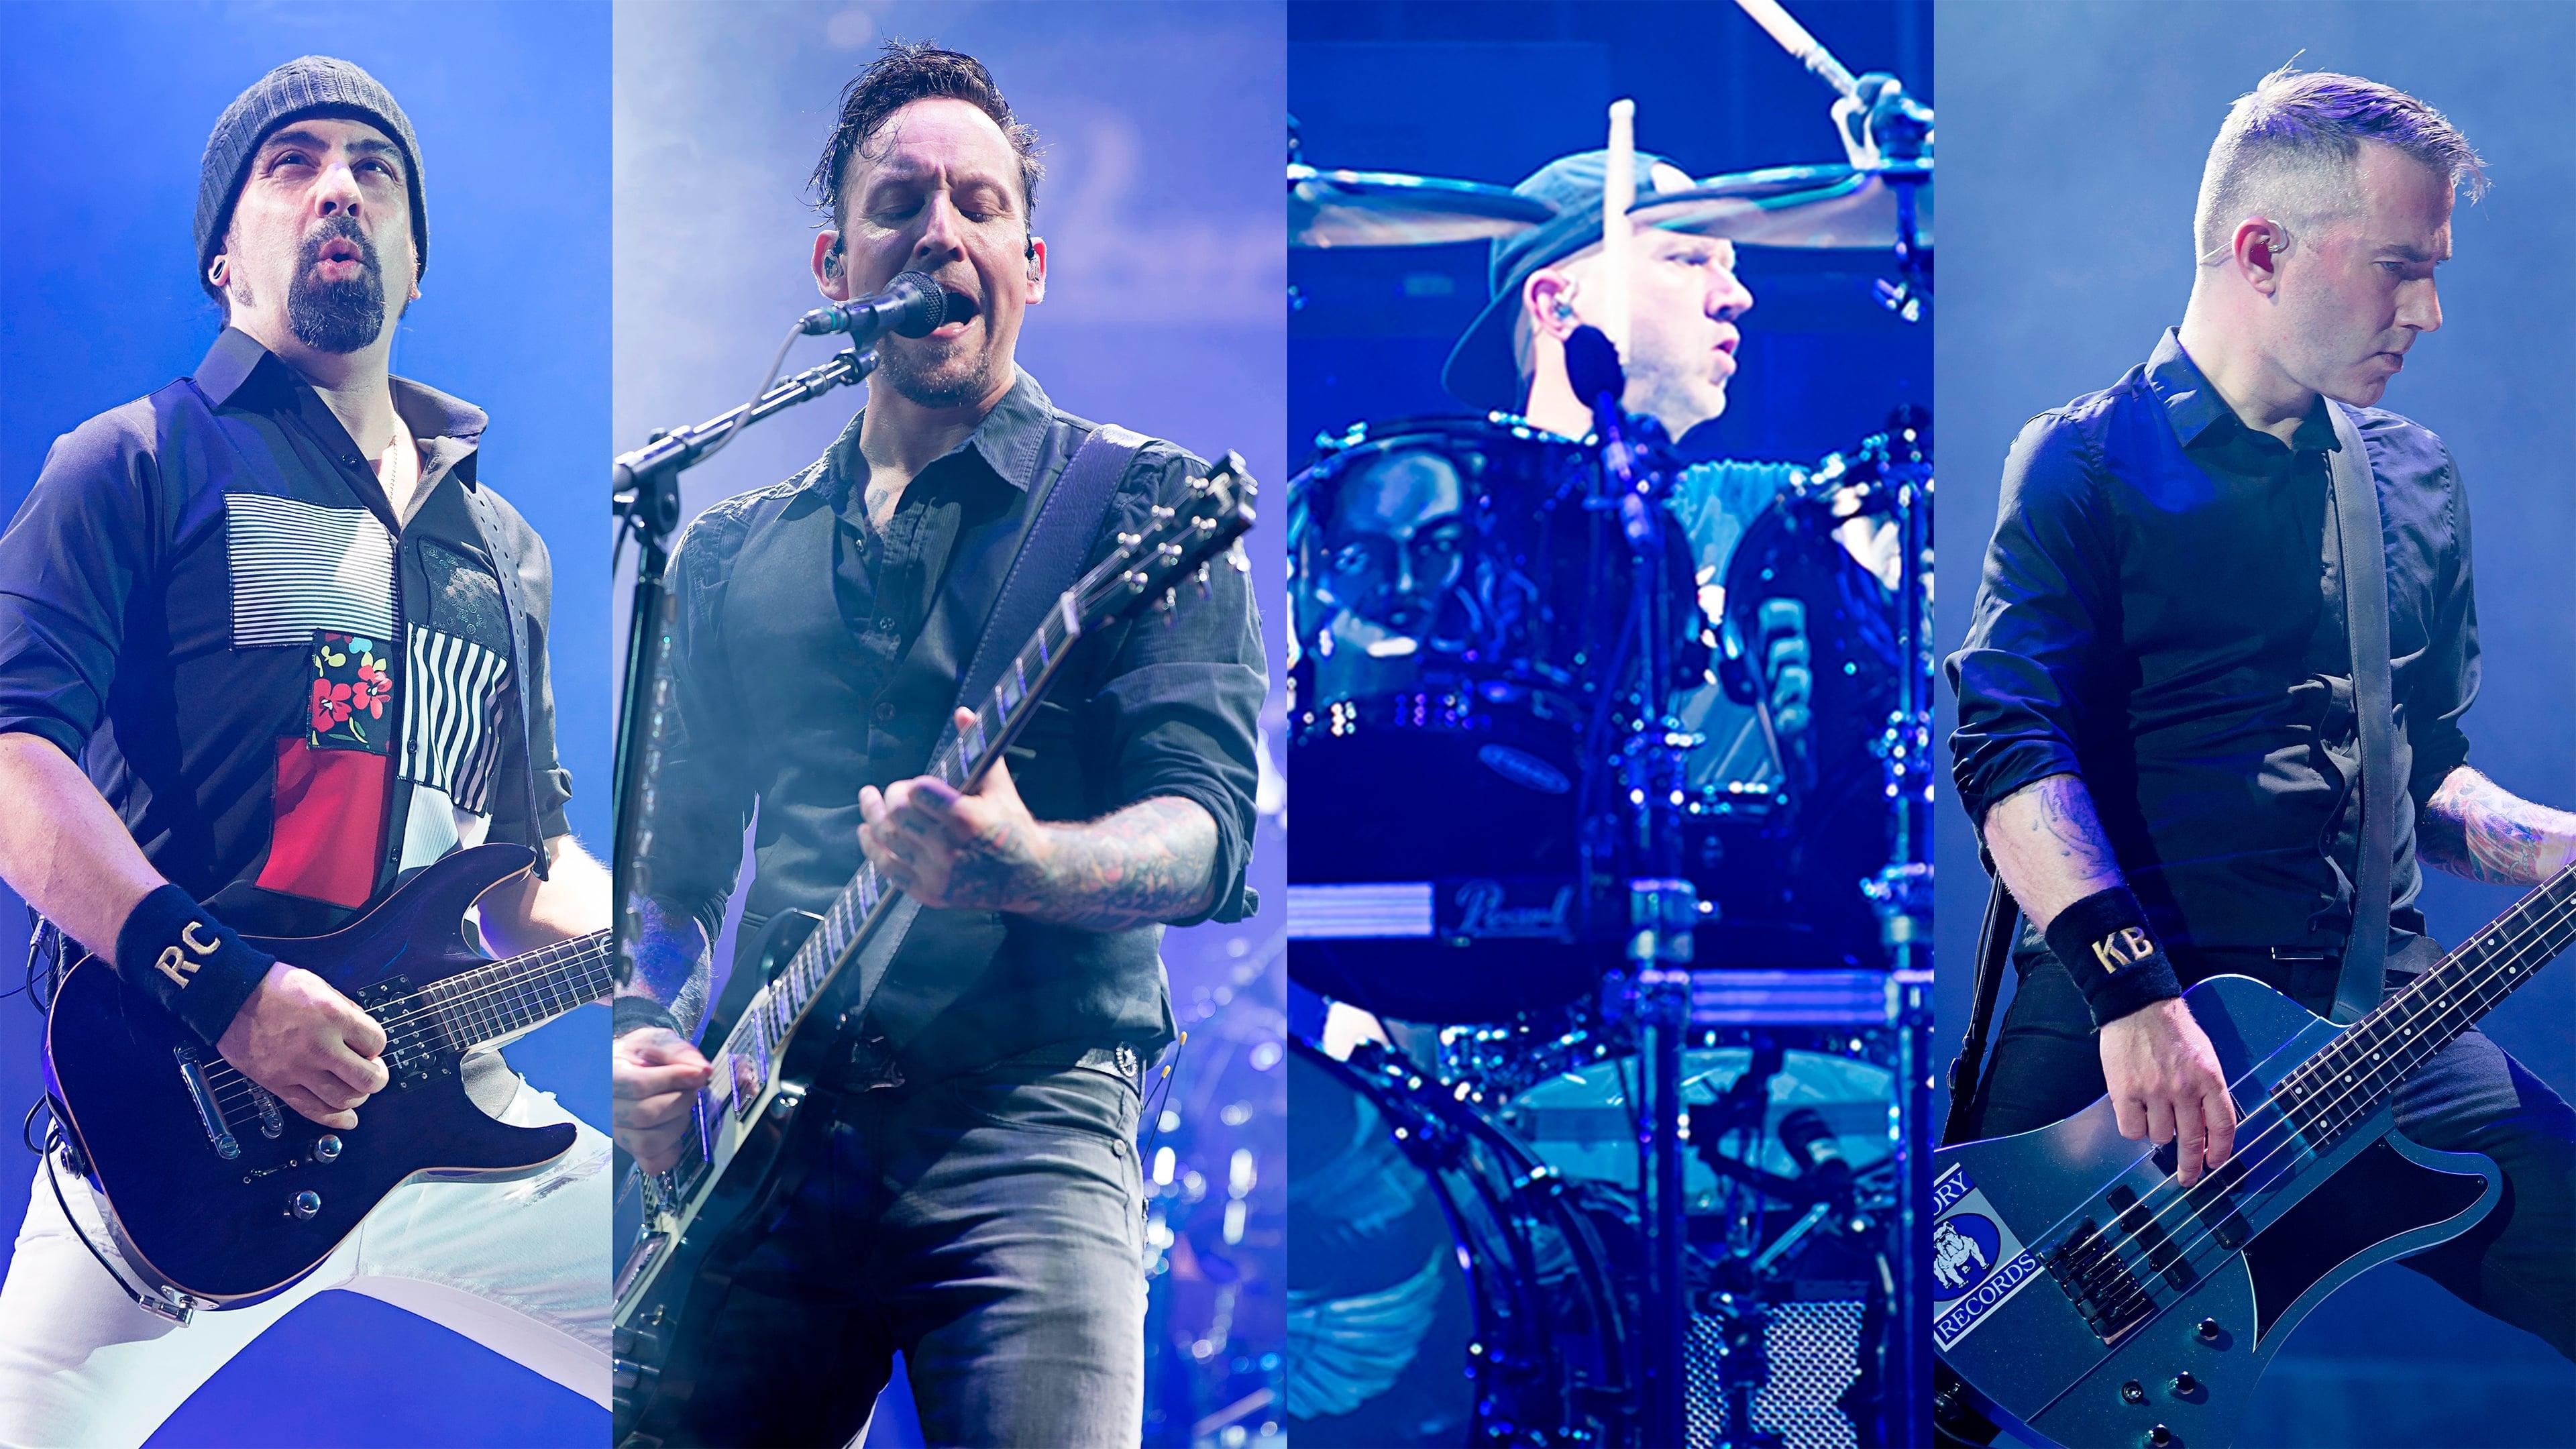 Volbeat - Let’s Boogie! Live from Telia Parken backdrop